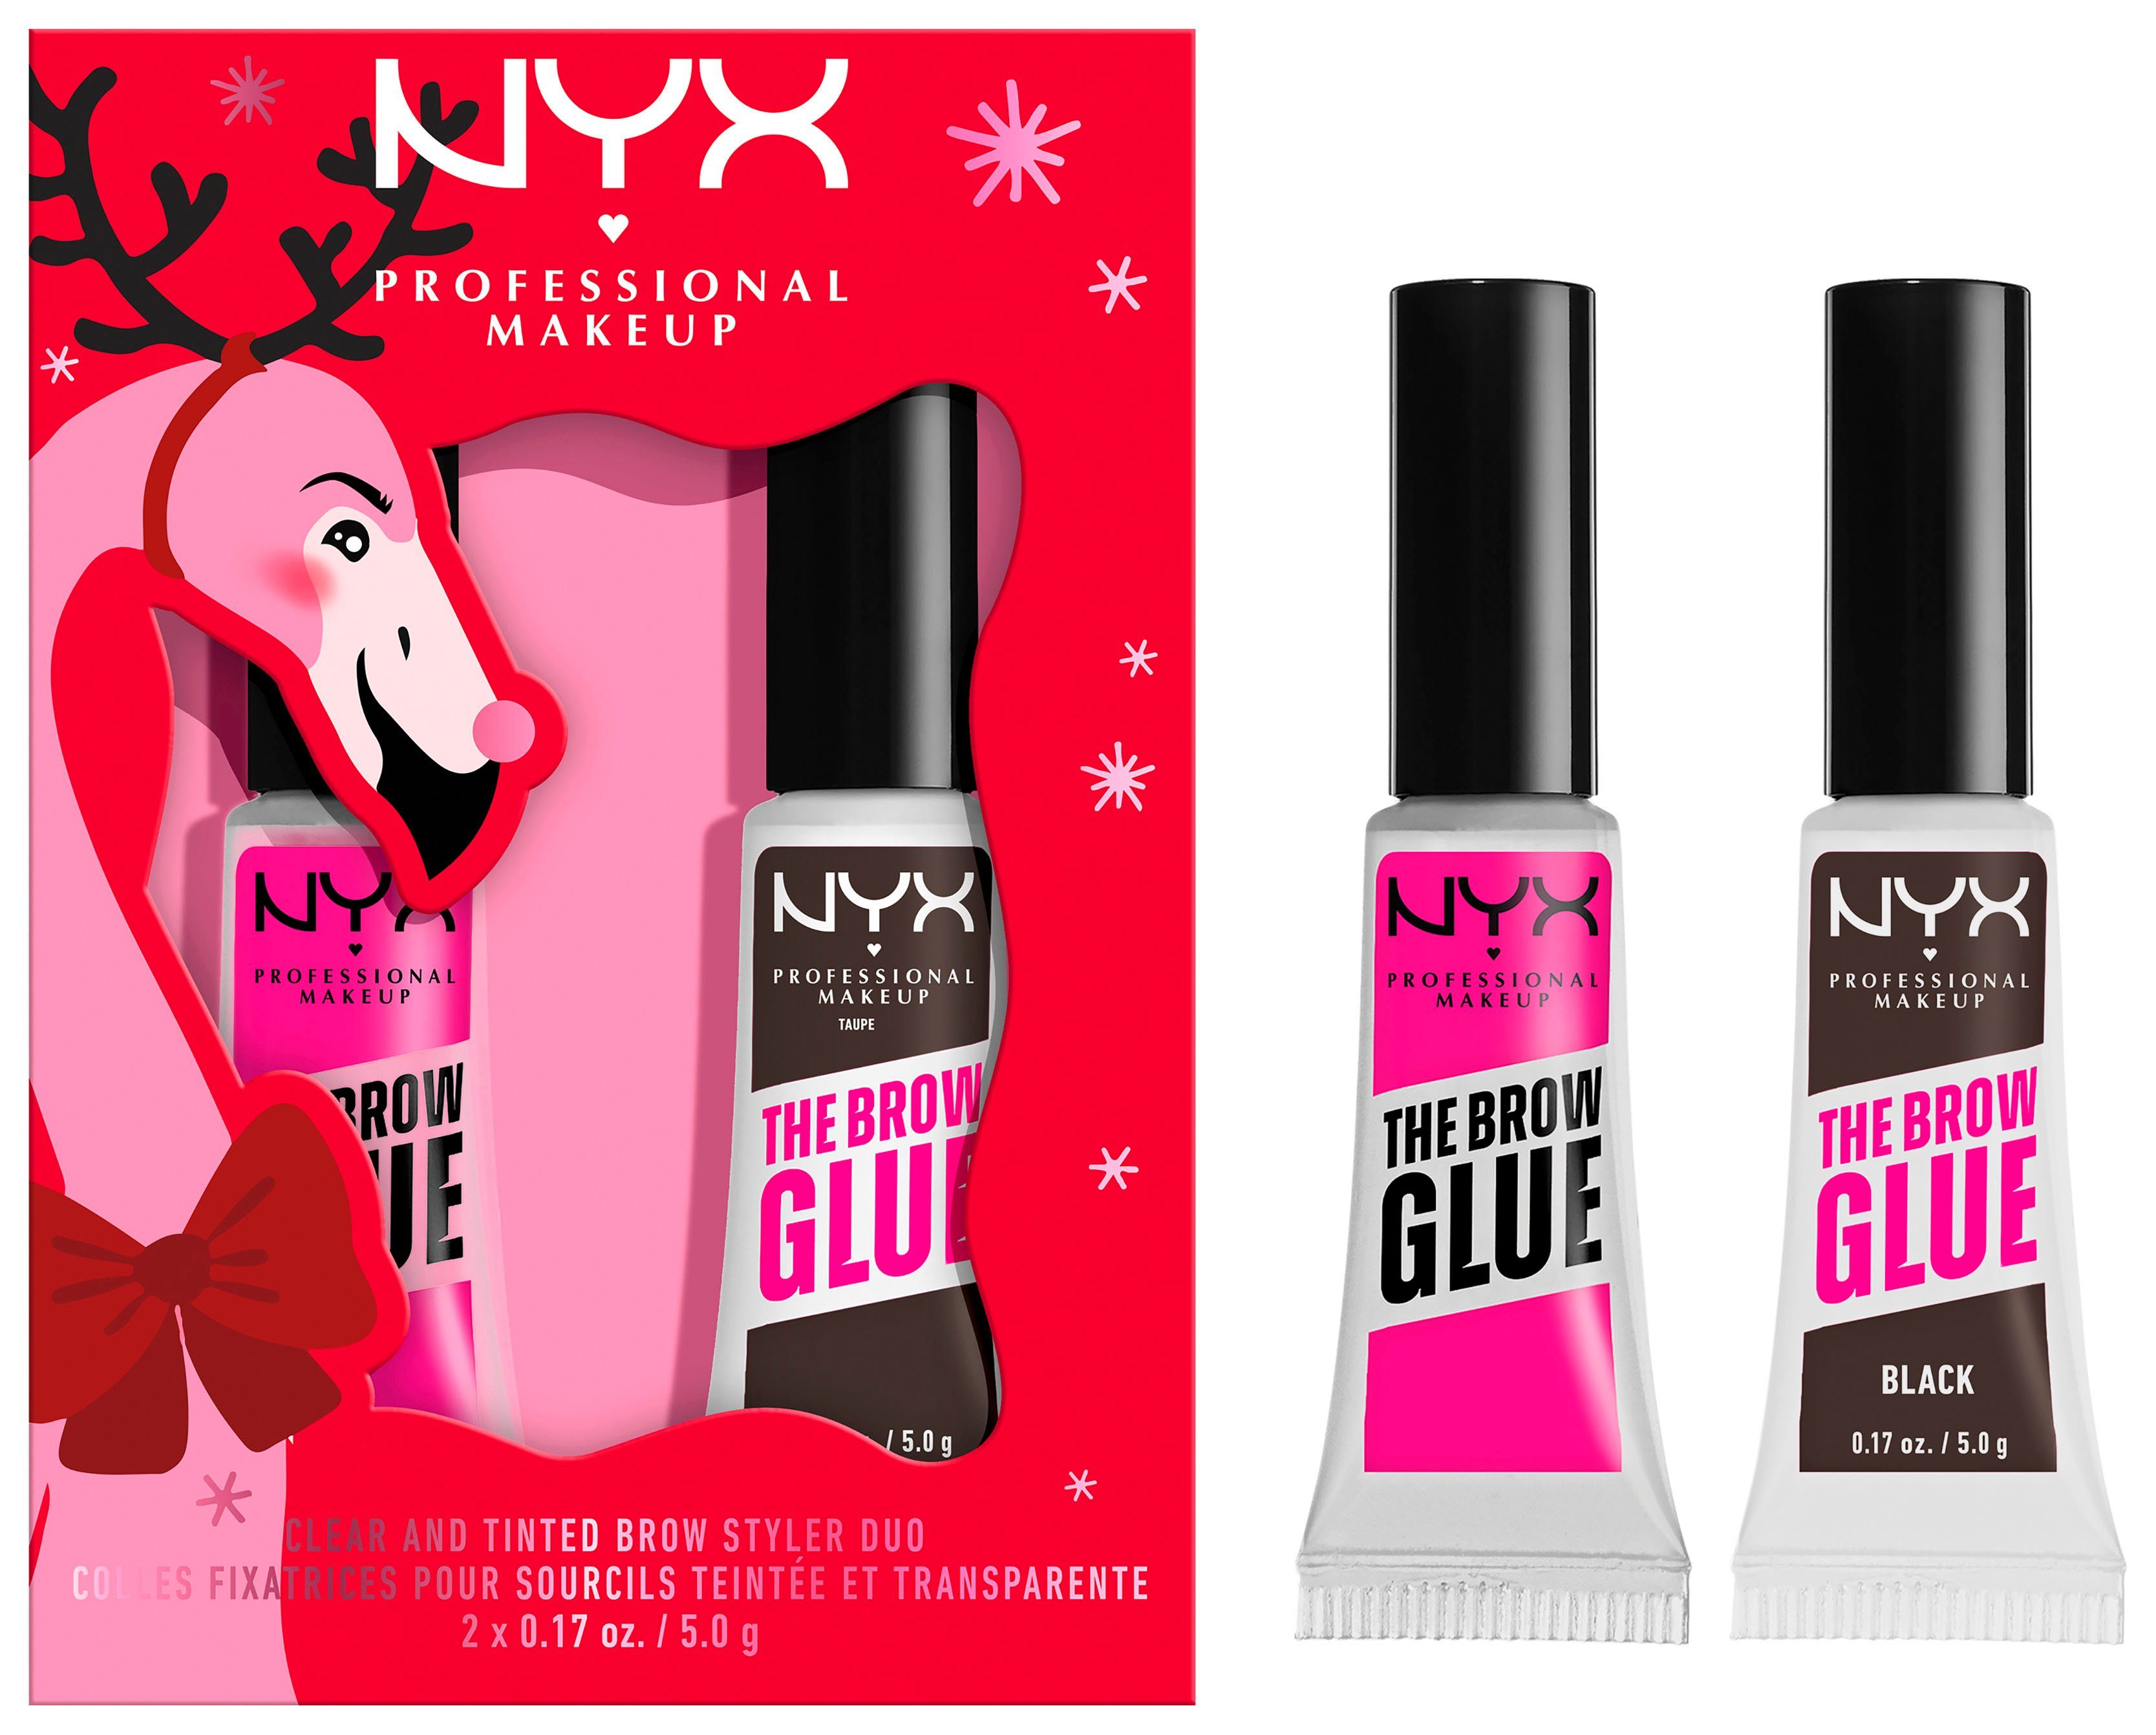 Brow NYX Glue NYX Duo, Makeup Finish Gel, Professional Textur deckend Kosmetik-Set Stick